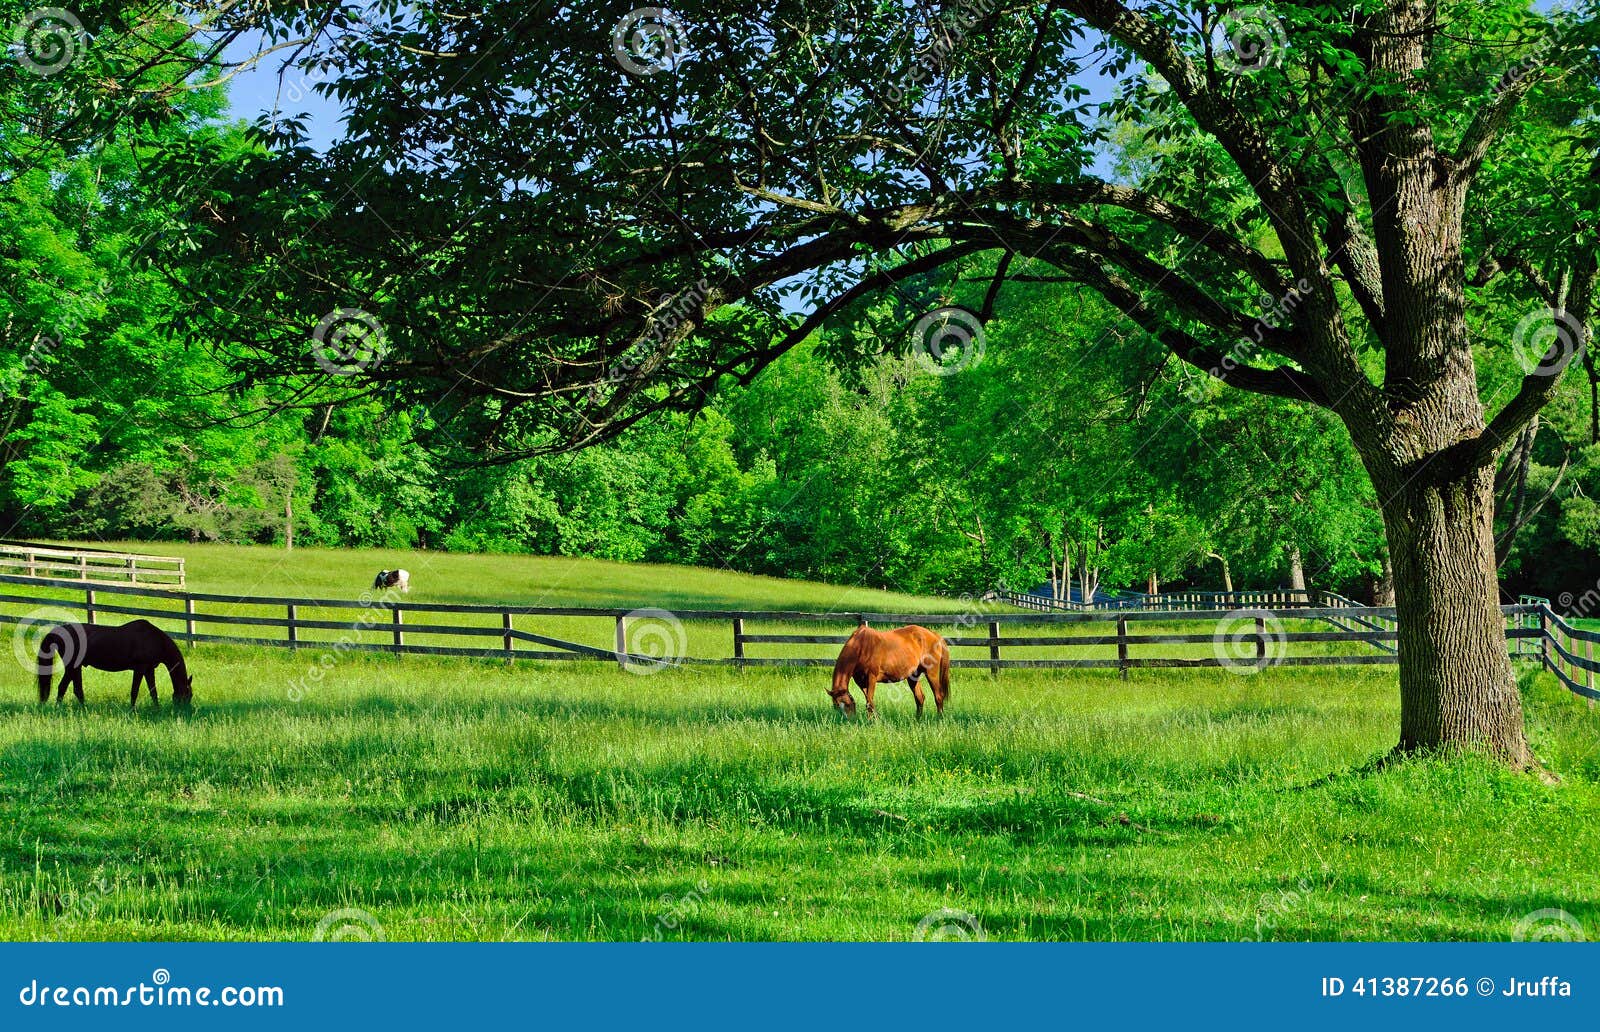 horses grazing in a rural farm pasture